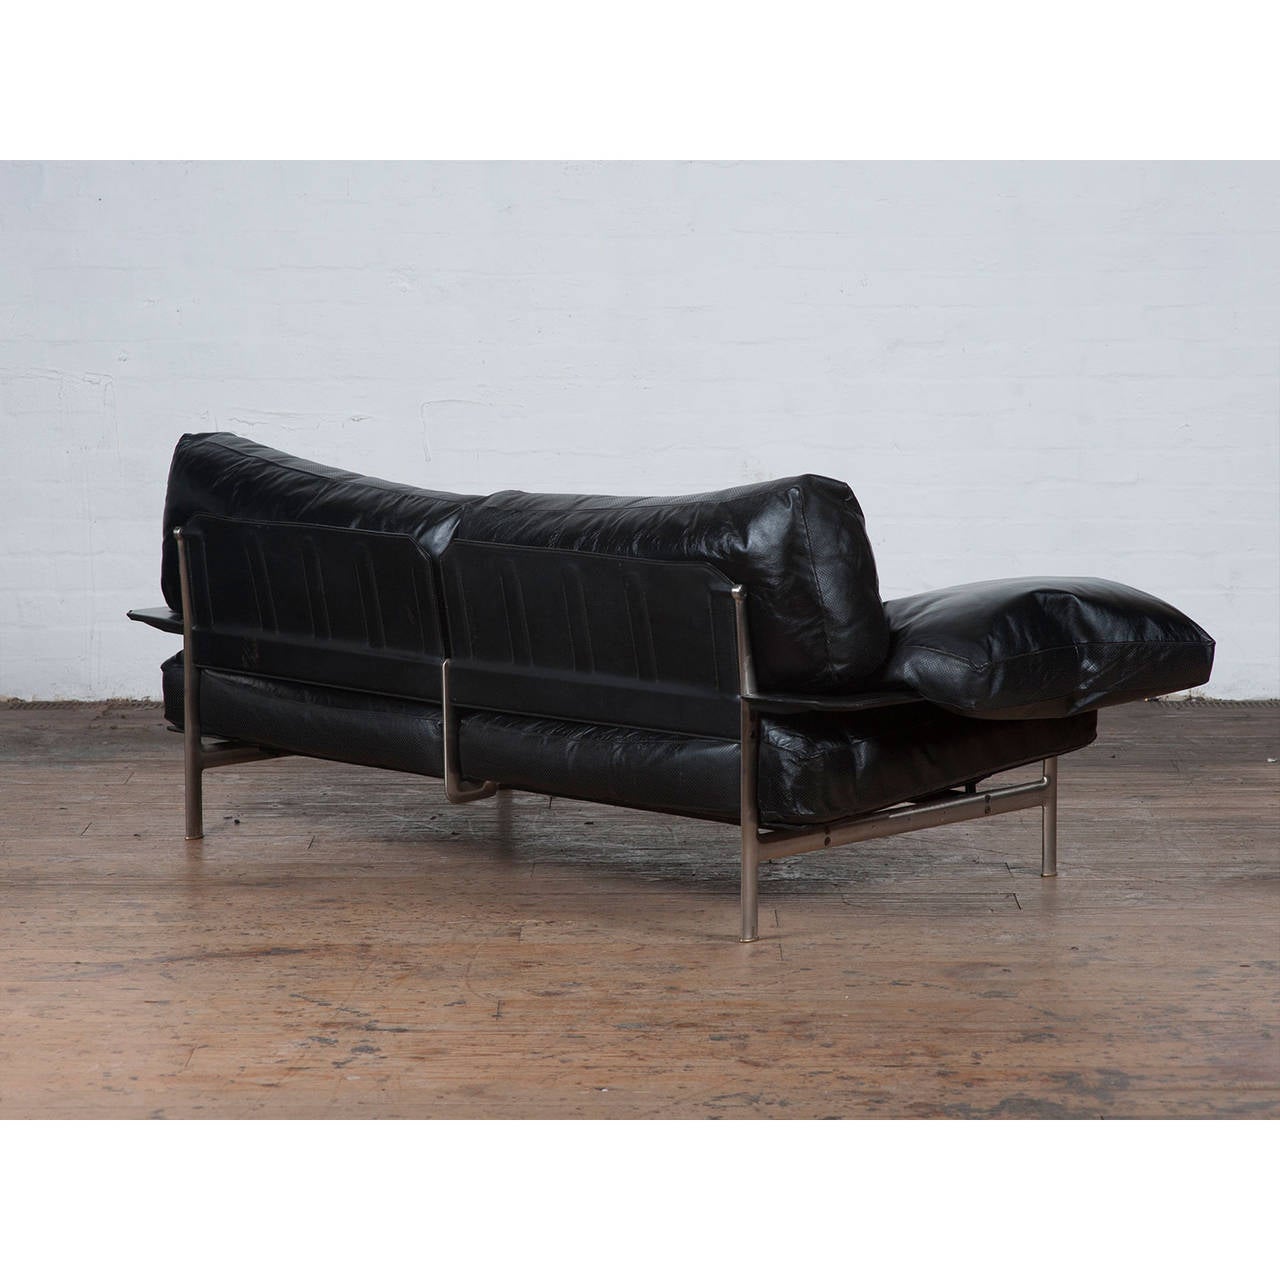 Scandinavian Modern 1970s Black Leather 'Diesis' Sofa by Antonio Citterio for B&B Italia